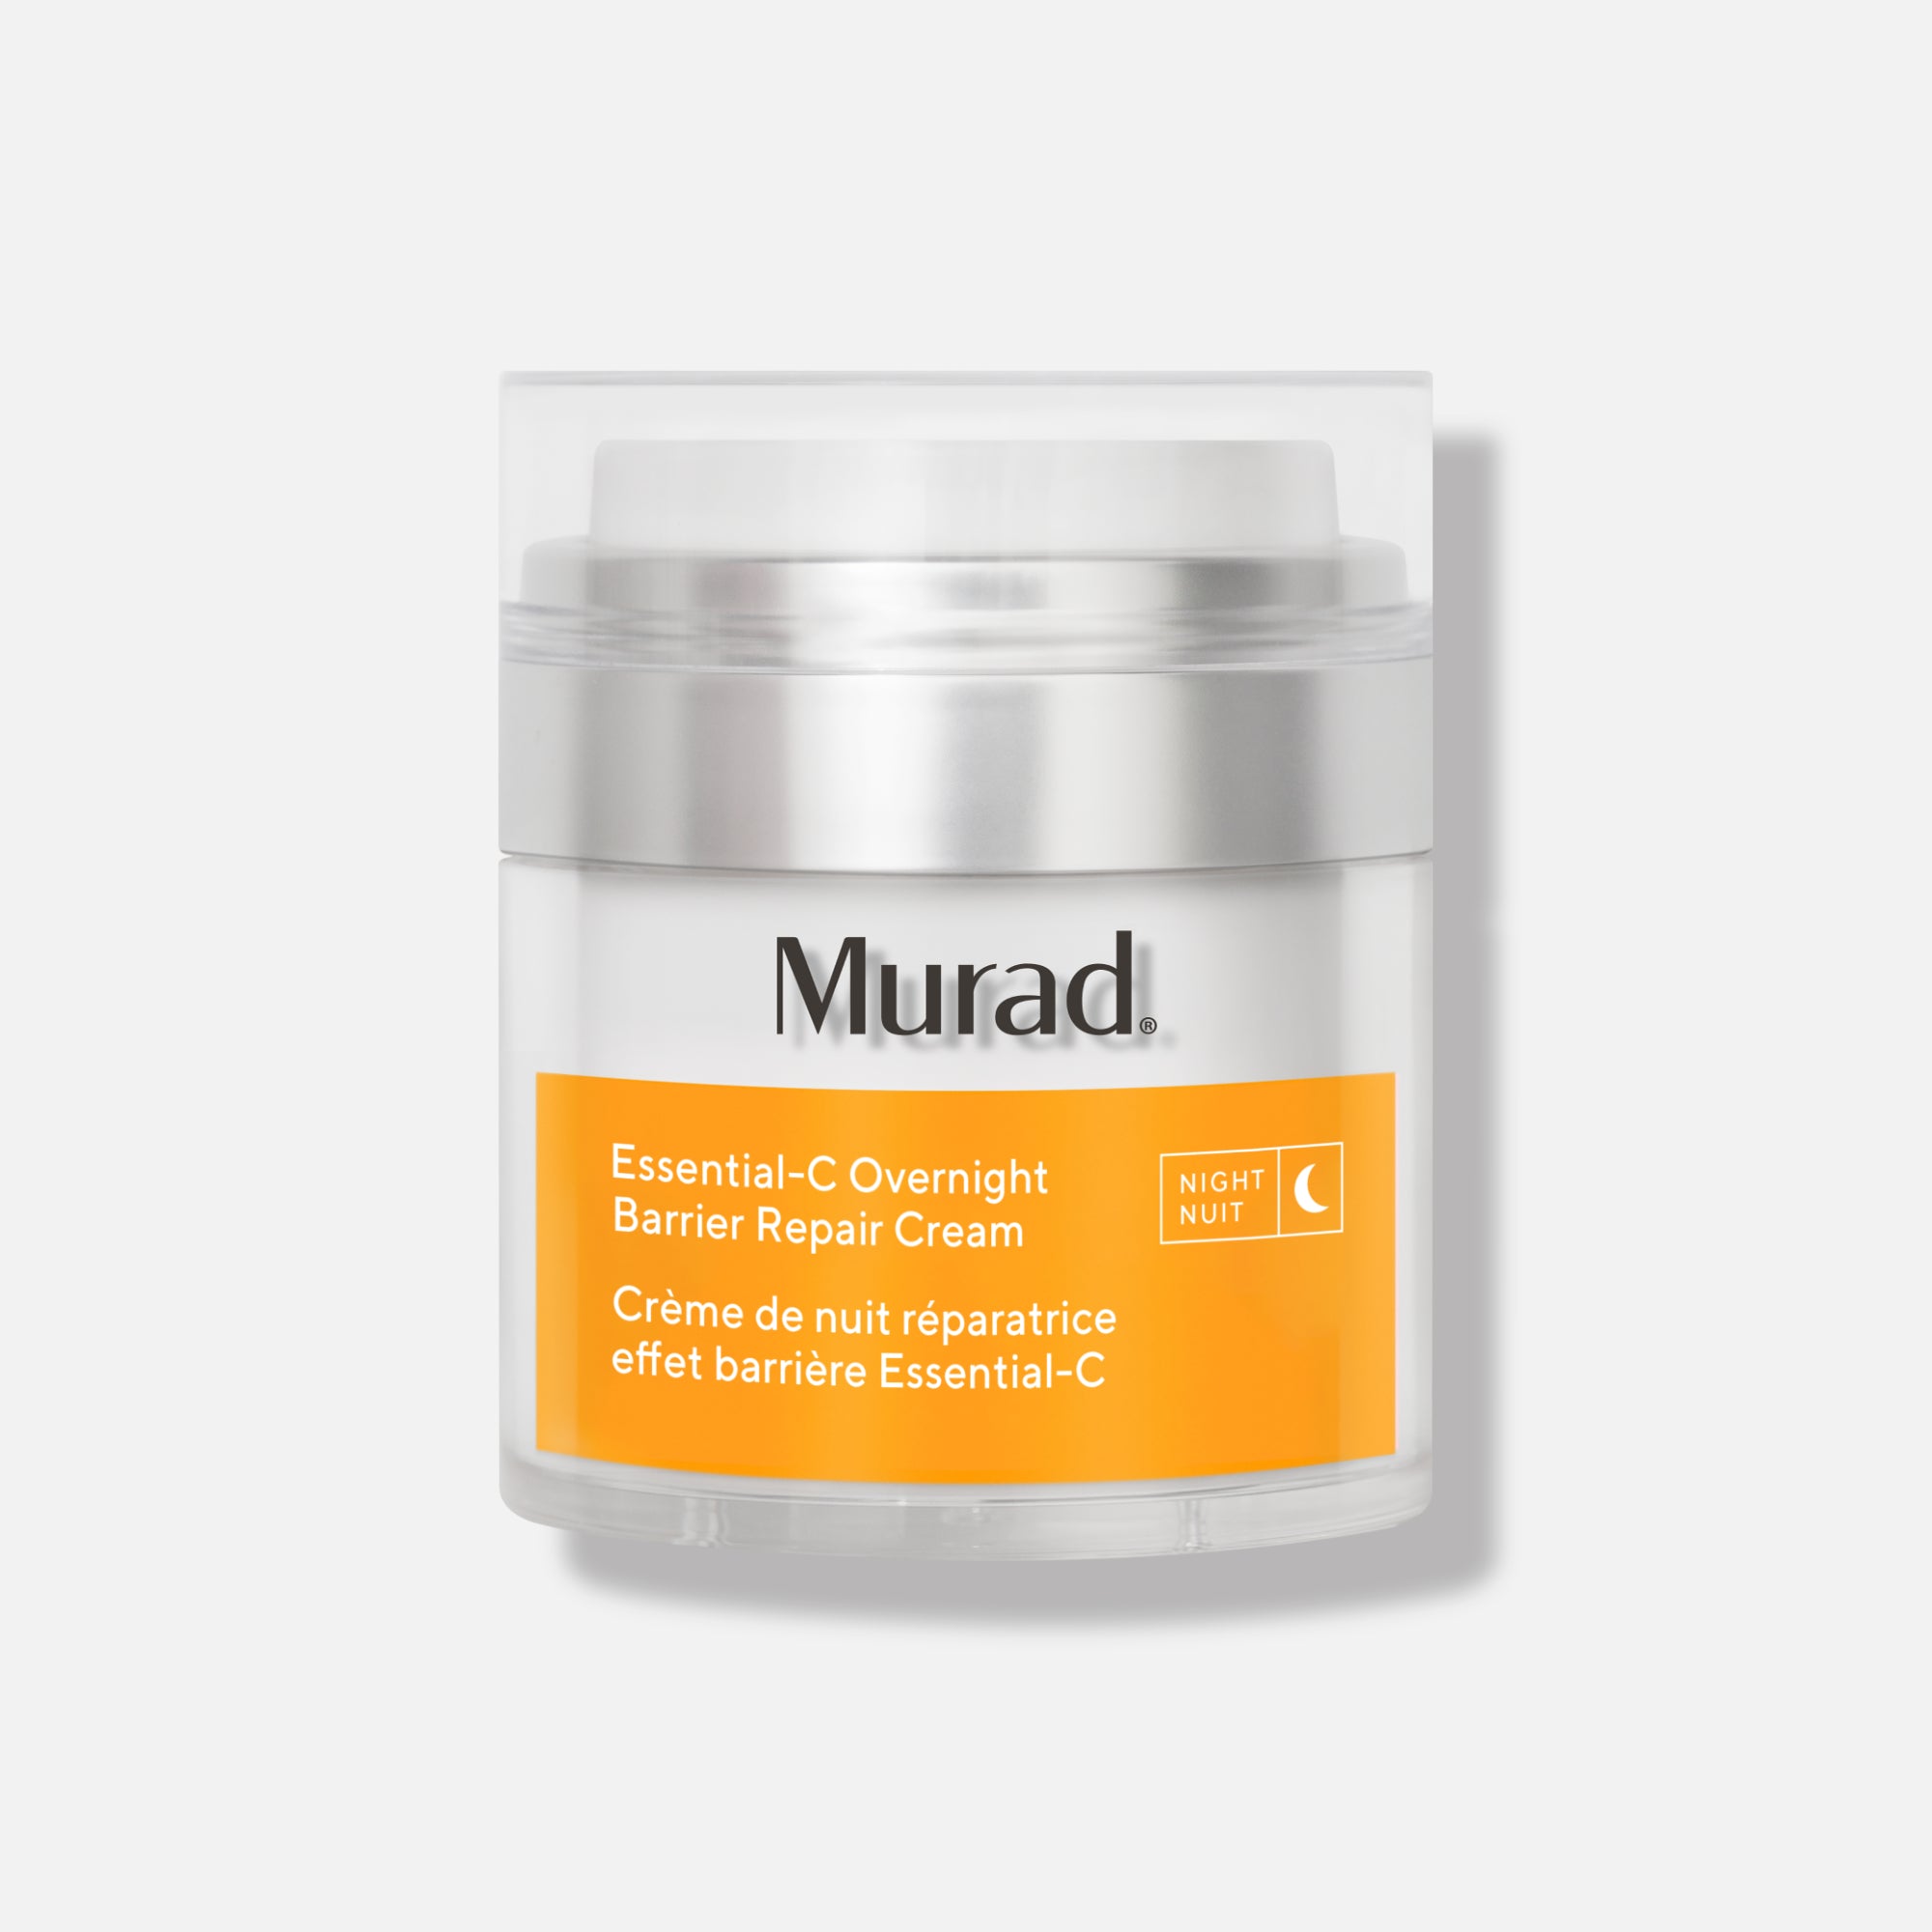 Murad - Essential-C Overnight Barrier Repair Cream 50ml - ebeauty